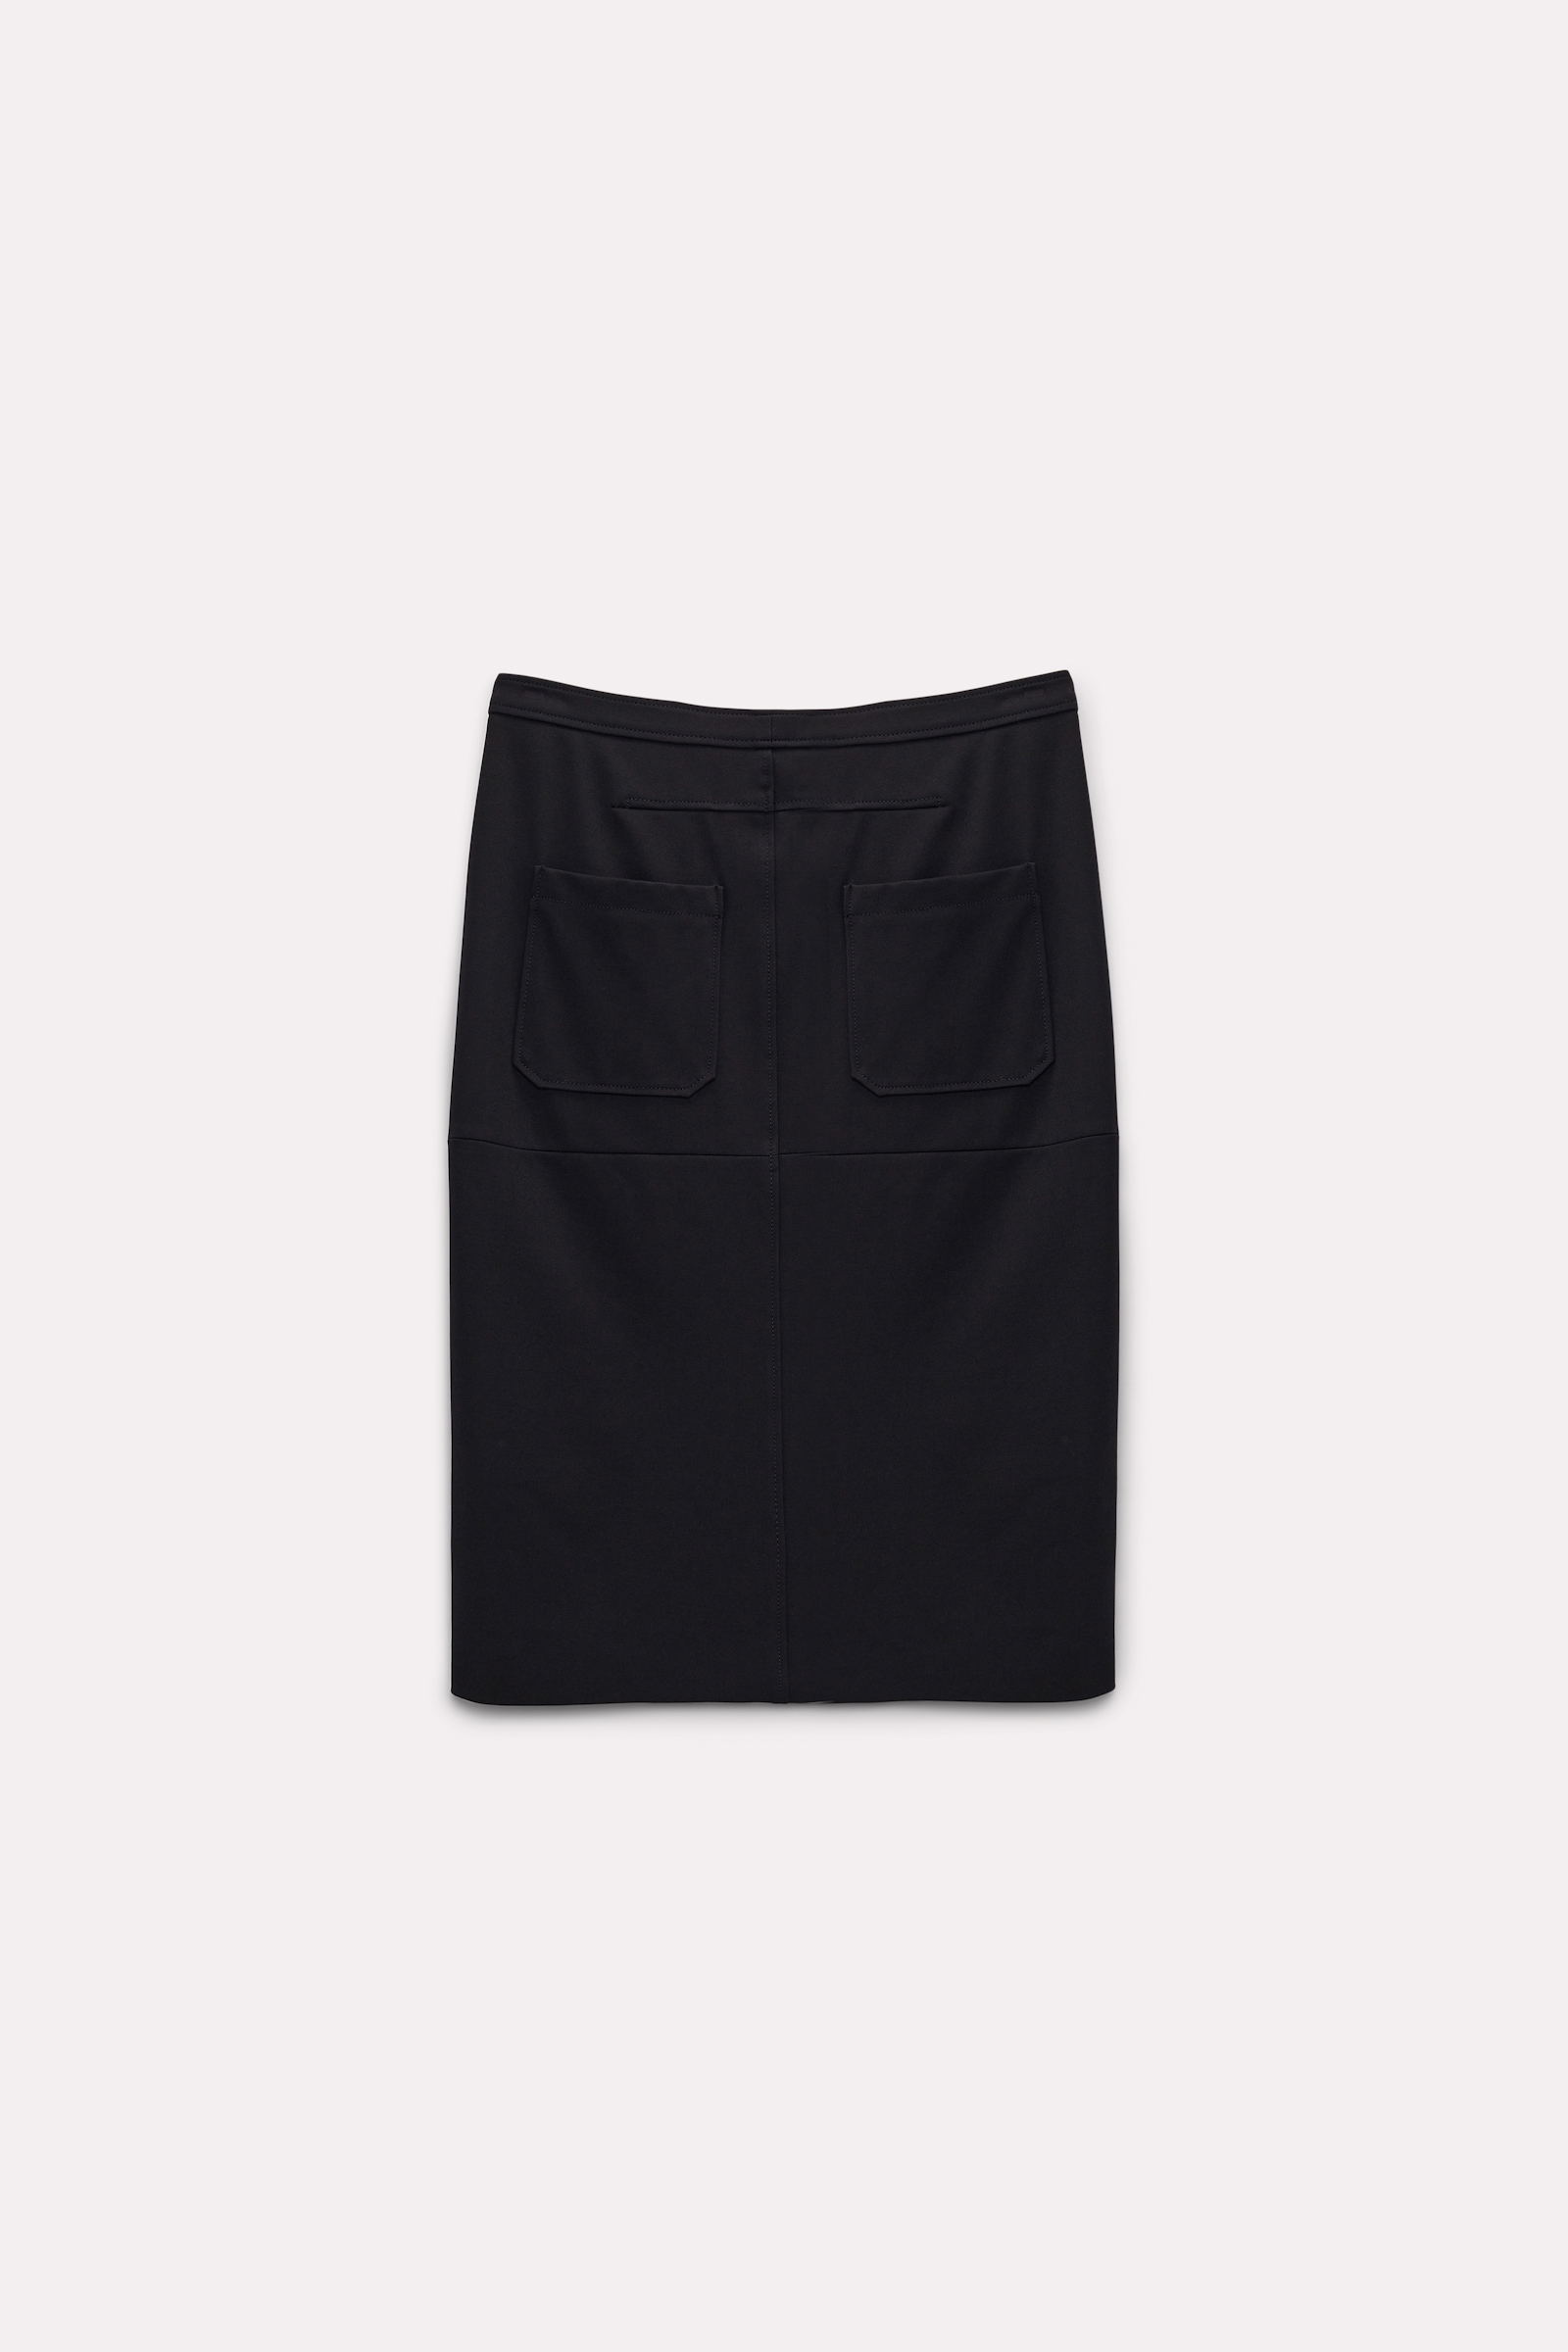 Dorothee Schumacher Punto Milano skirt with zipper detailing pure black